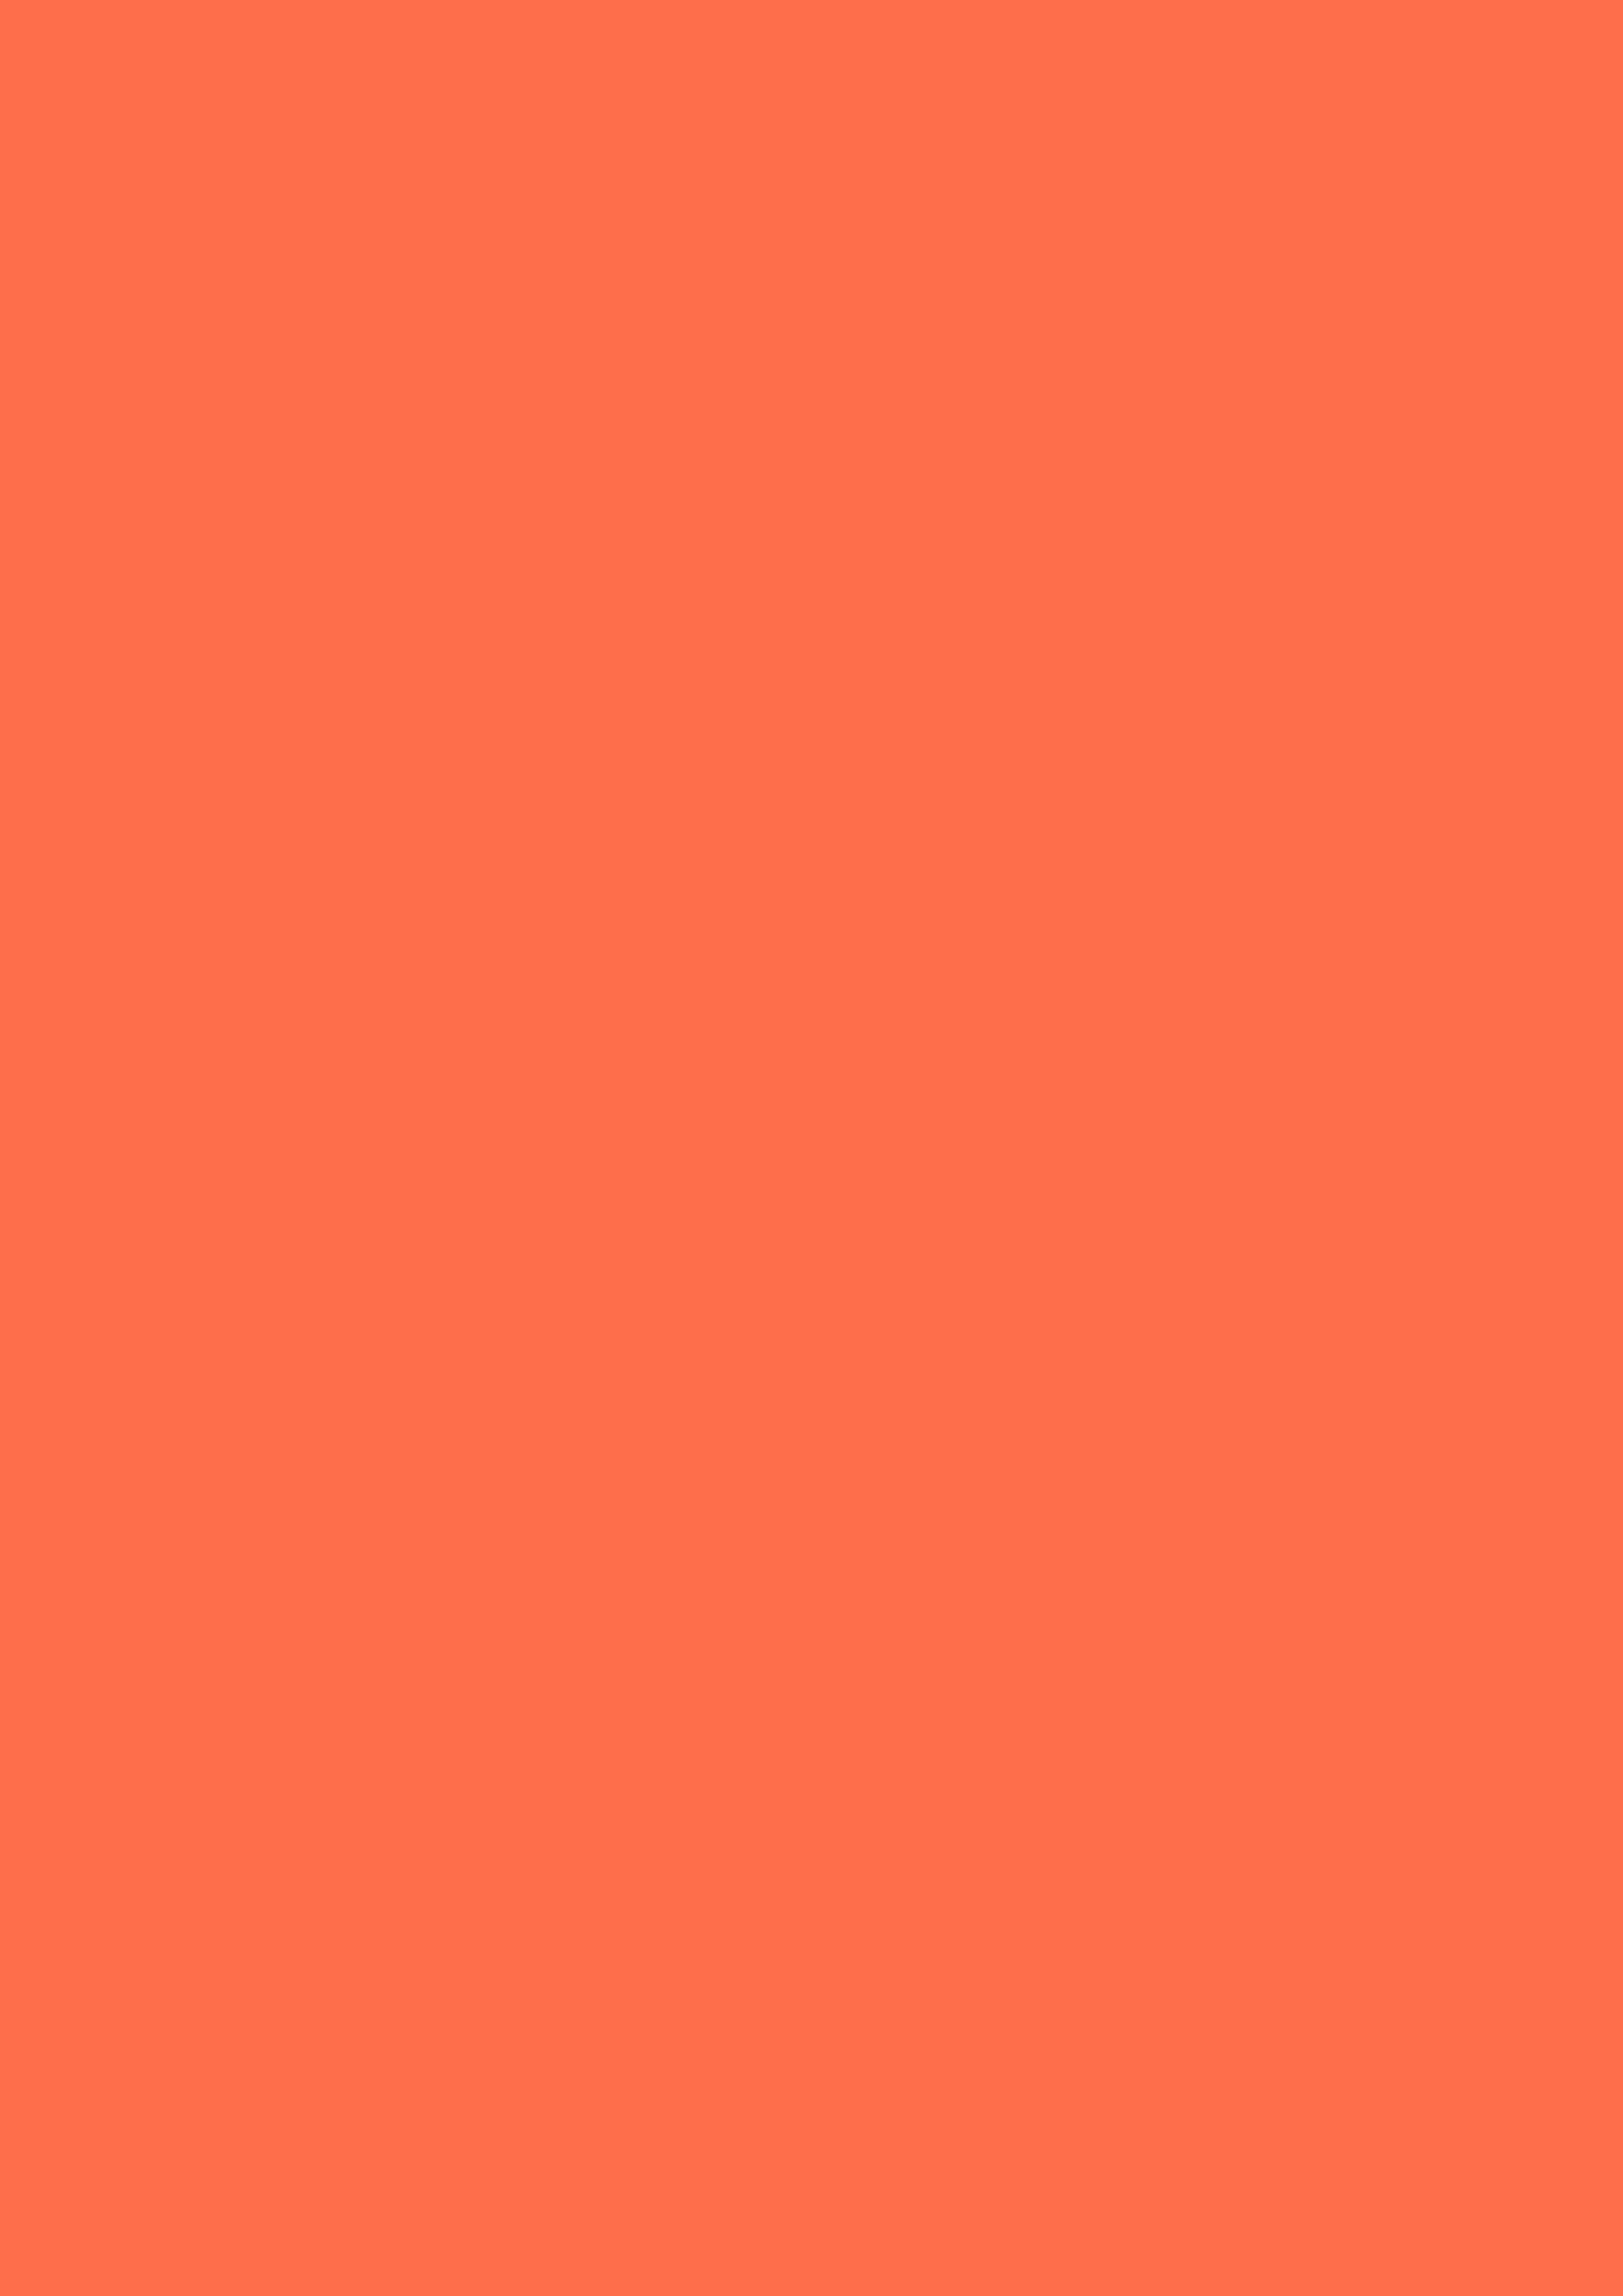 2480x3508 Outrageous Orange Solid Color Background